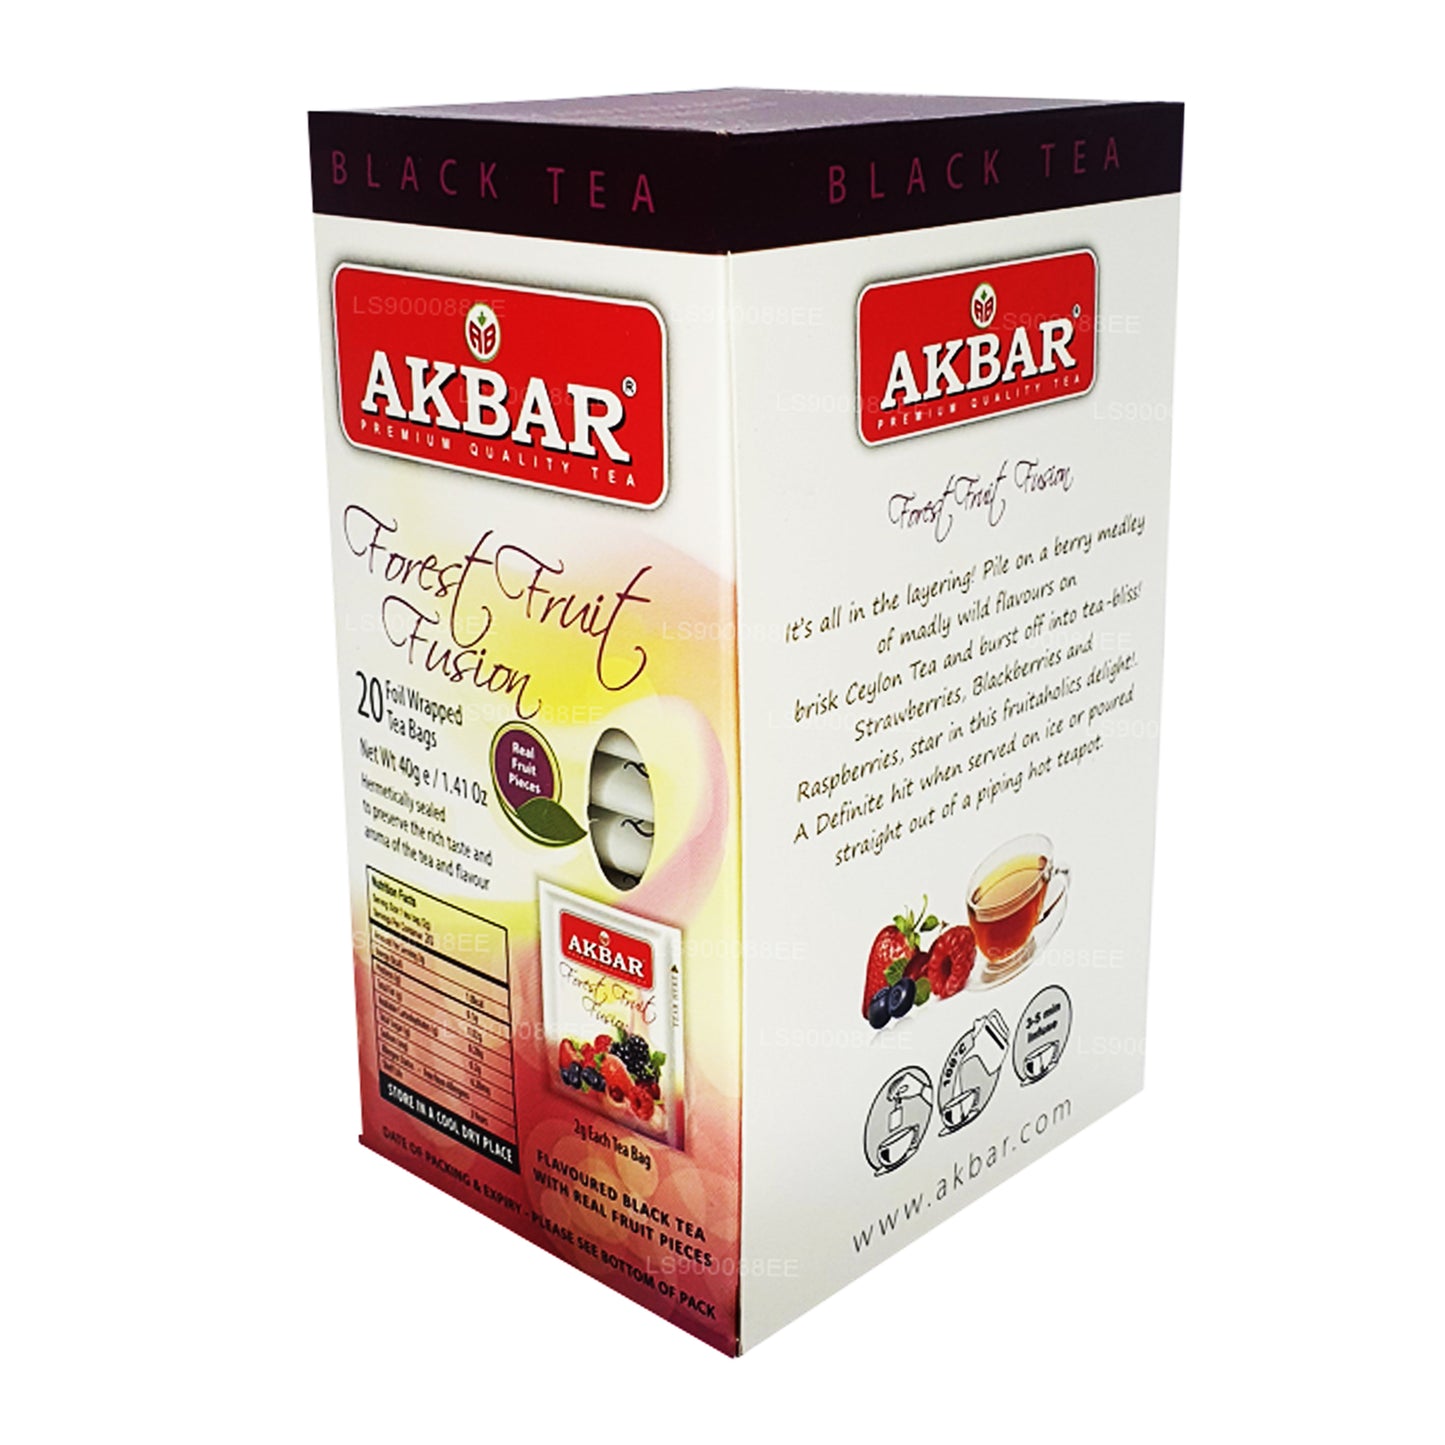 Akbar Forest Frugt Fusion (40g) 20 teposer